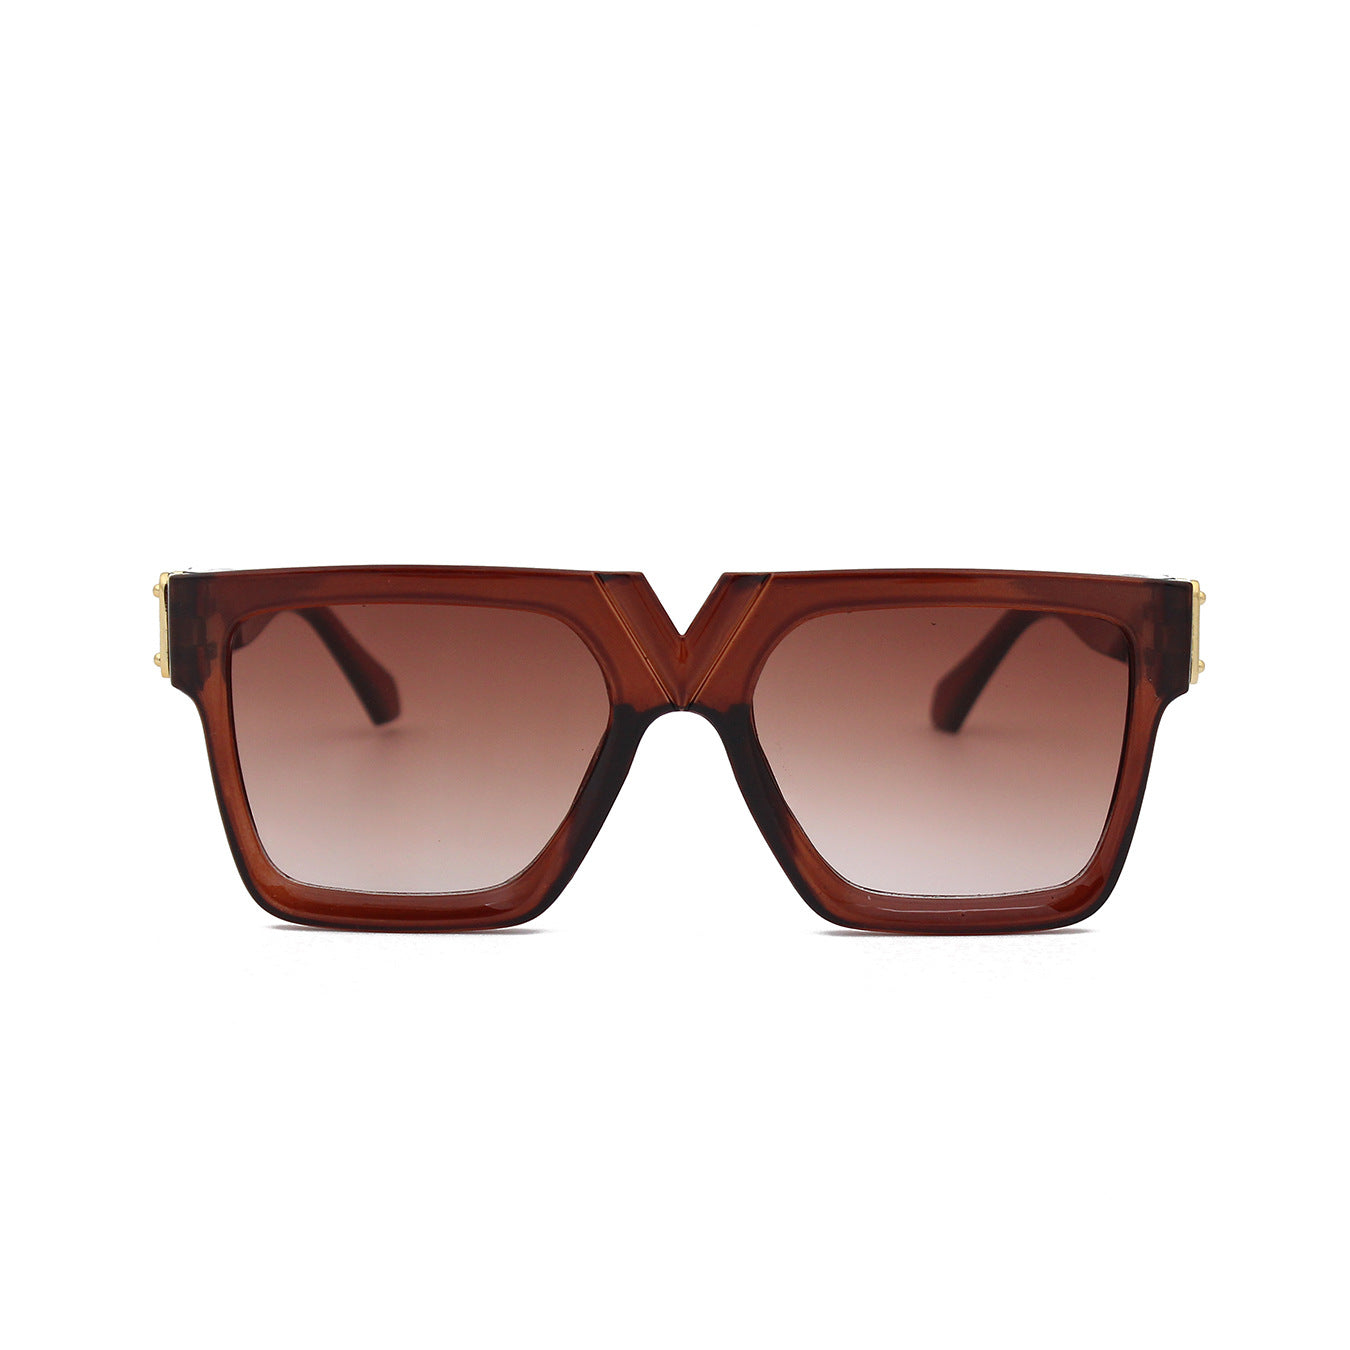 Square thick frame sunglasses - Sunglasses -  Trend Goods